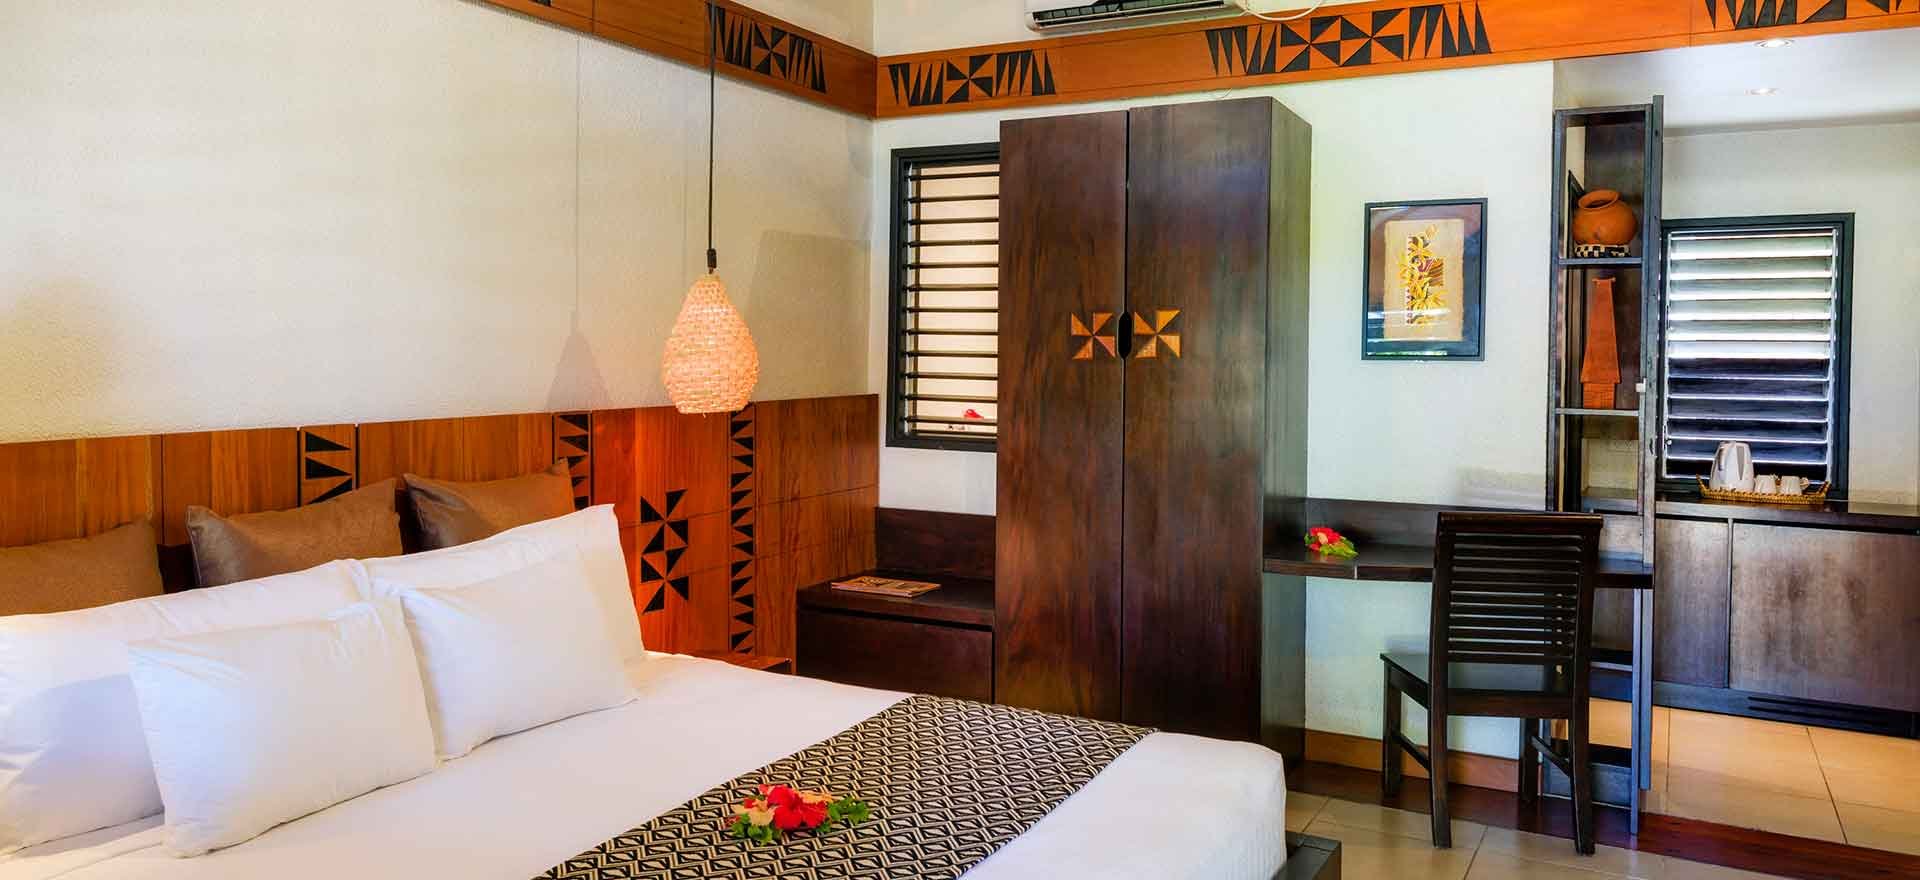 Matamanoa-Island-Resort-Hotel-Room.jpg